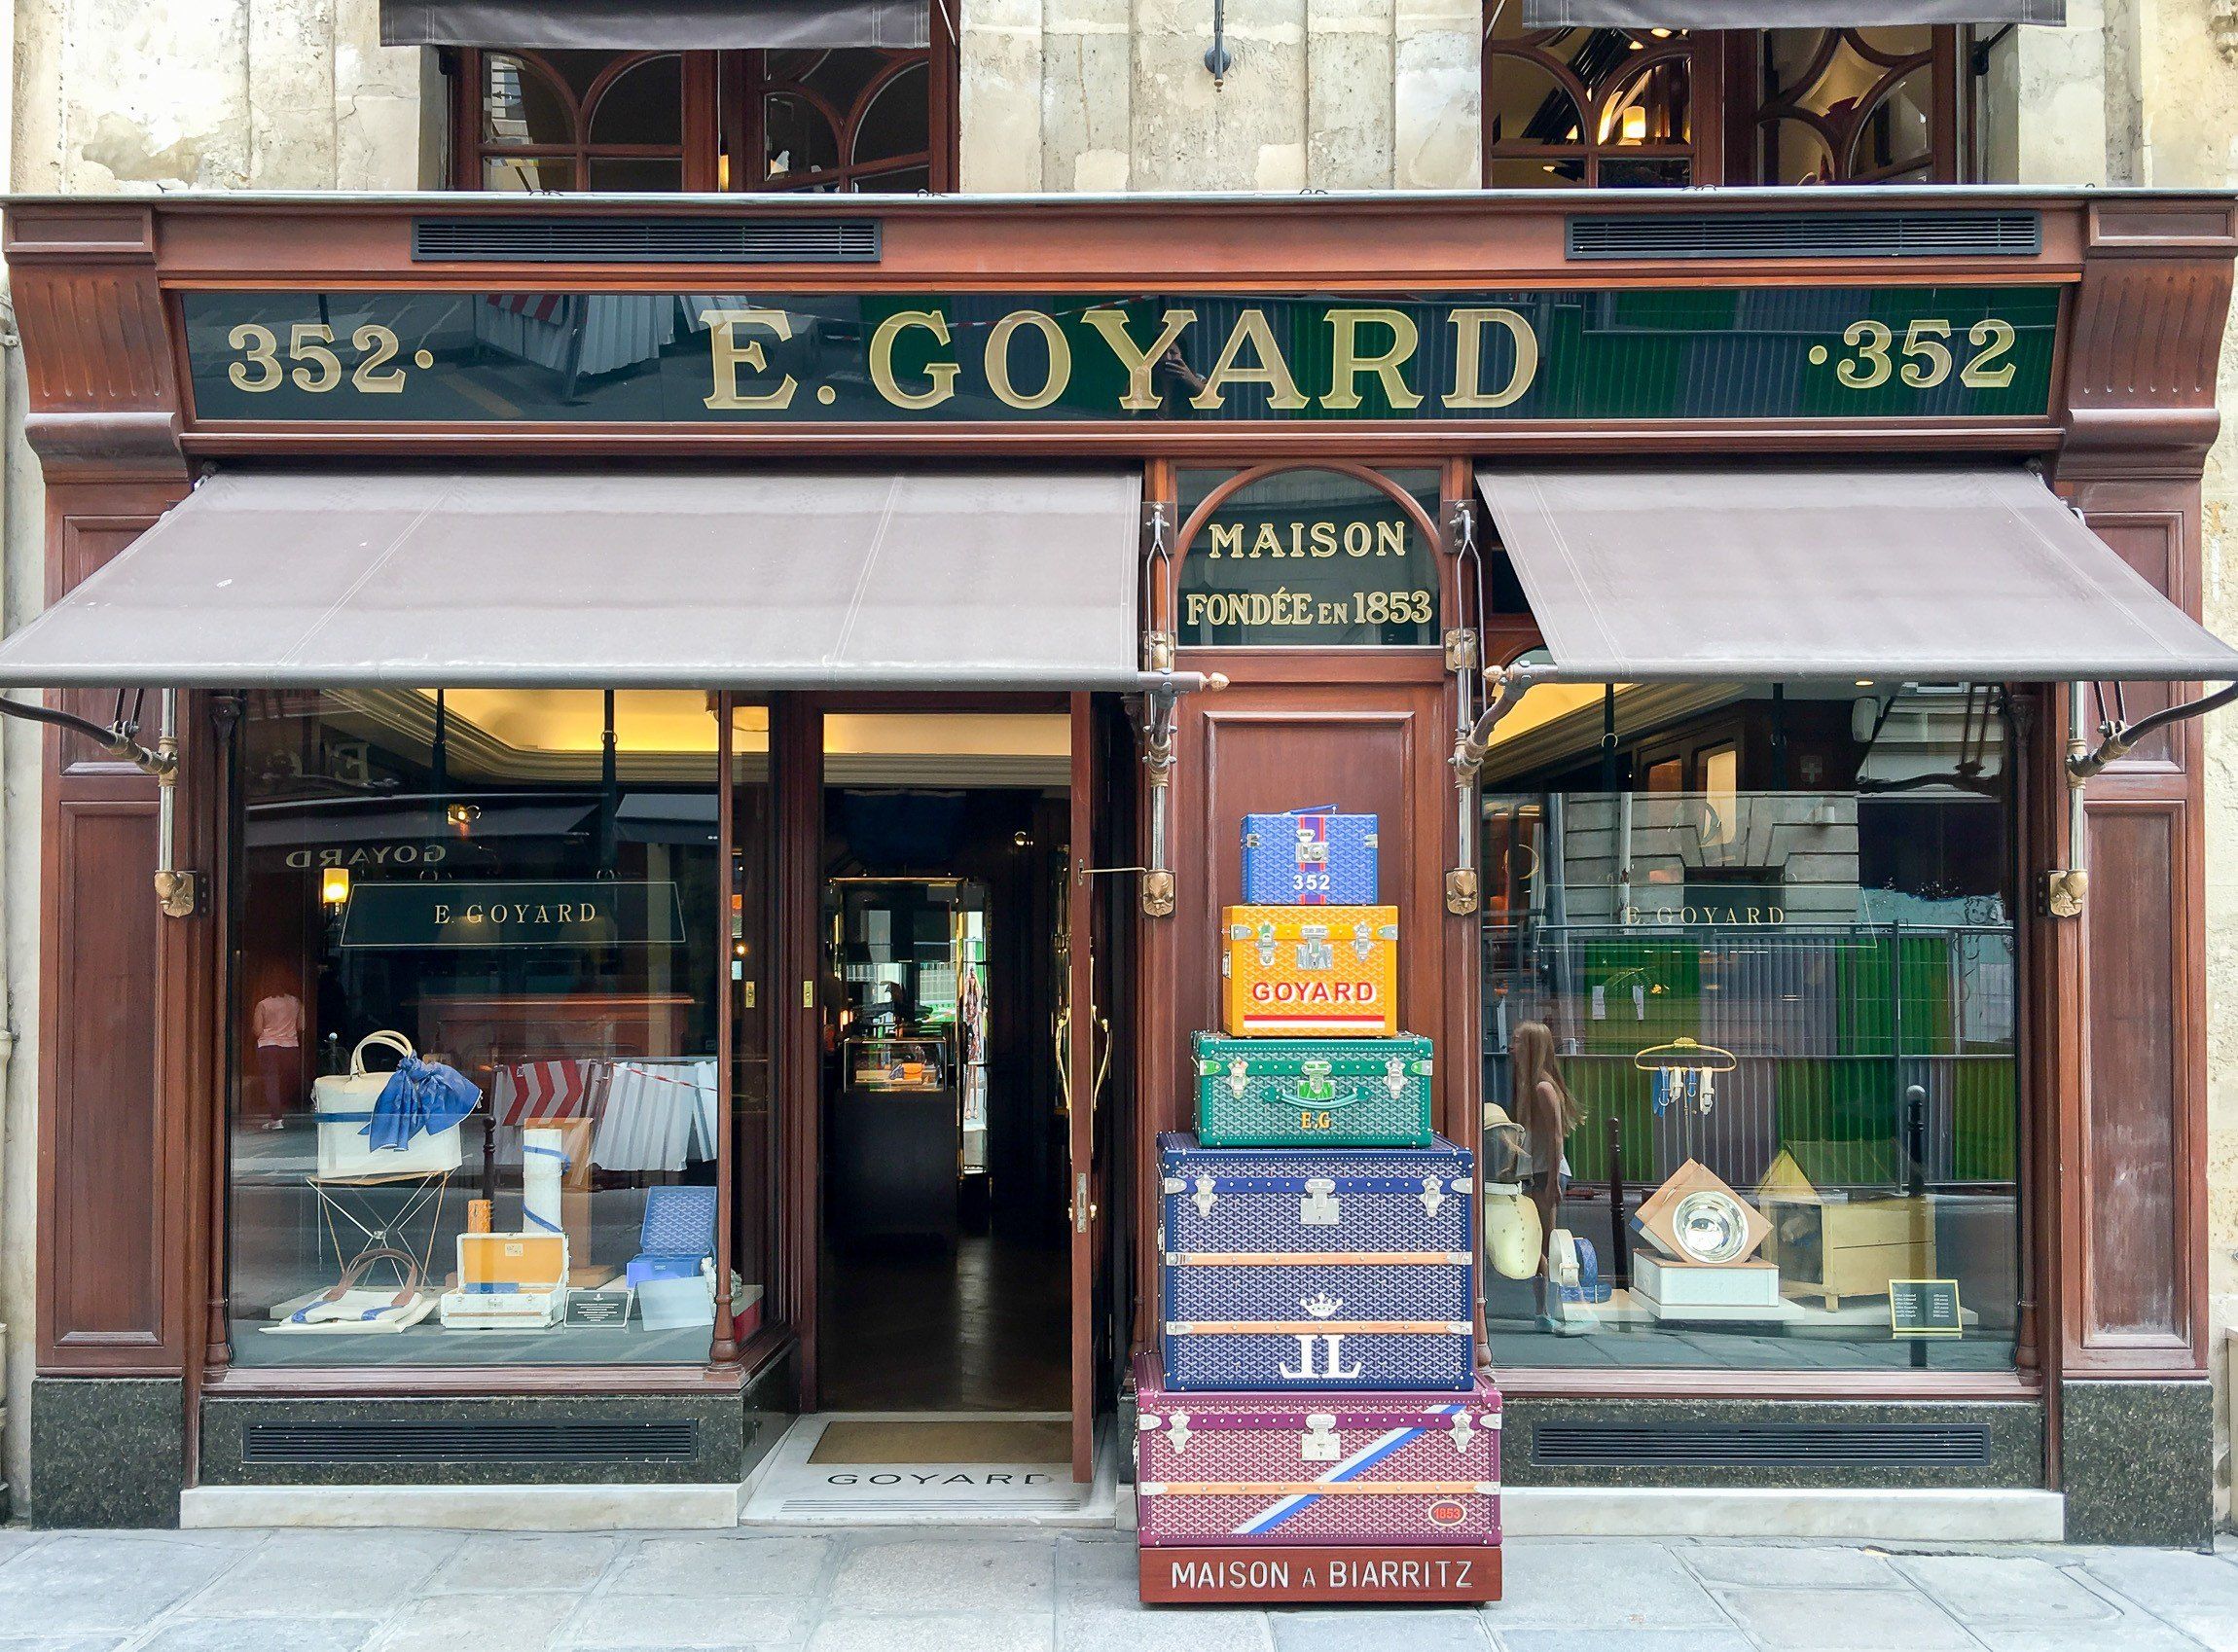 Maison Goyard - *Ever since 1890, Maison Goyard has been